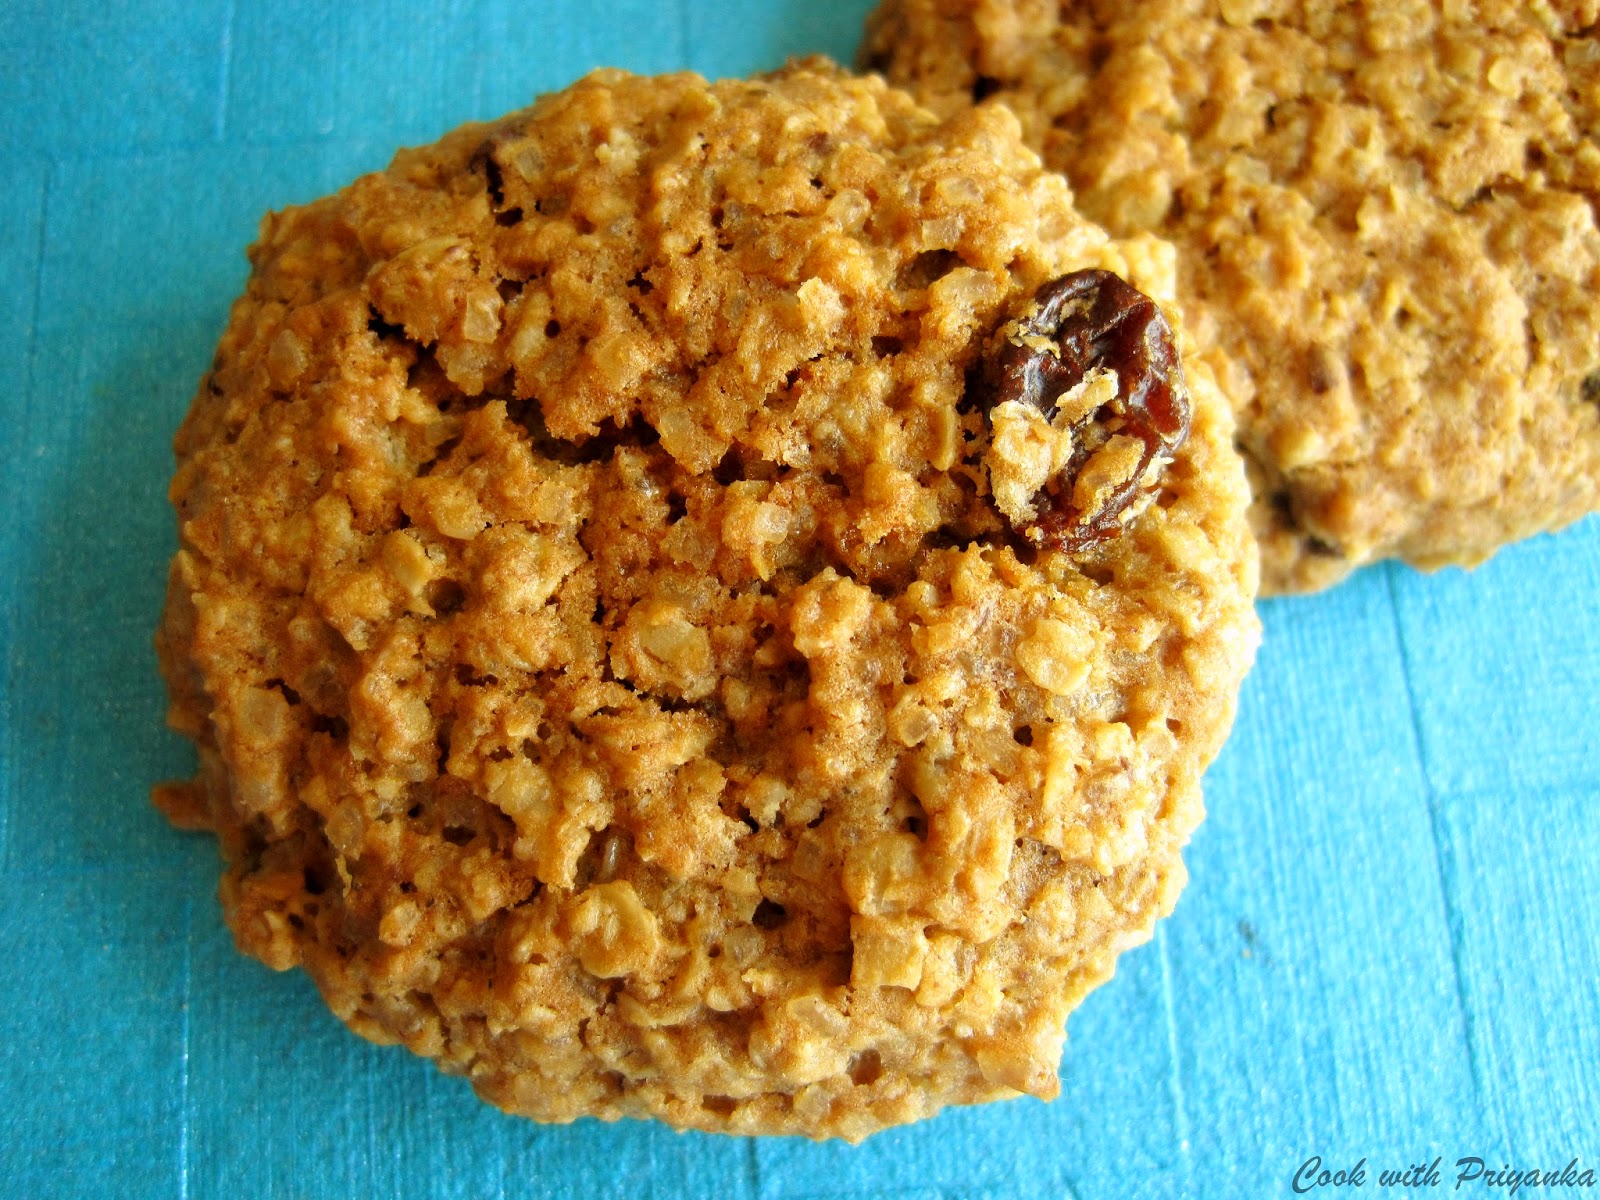 http://cookwithpriyankavarma.blogspot.co.uk/2014/05/oatmeal-raisins-chocolate-cookies.html